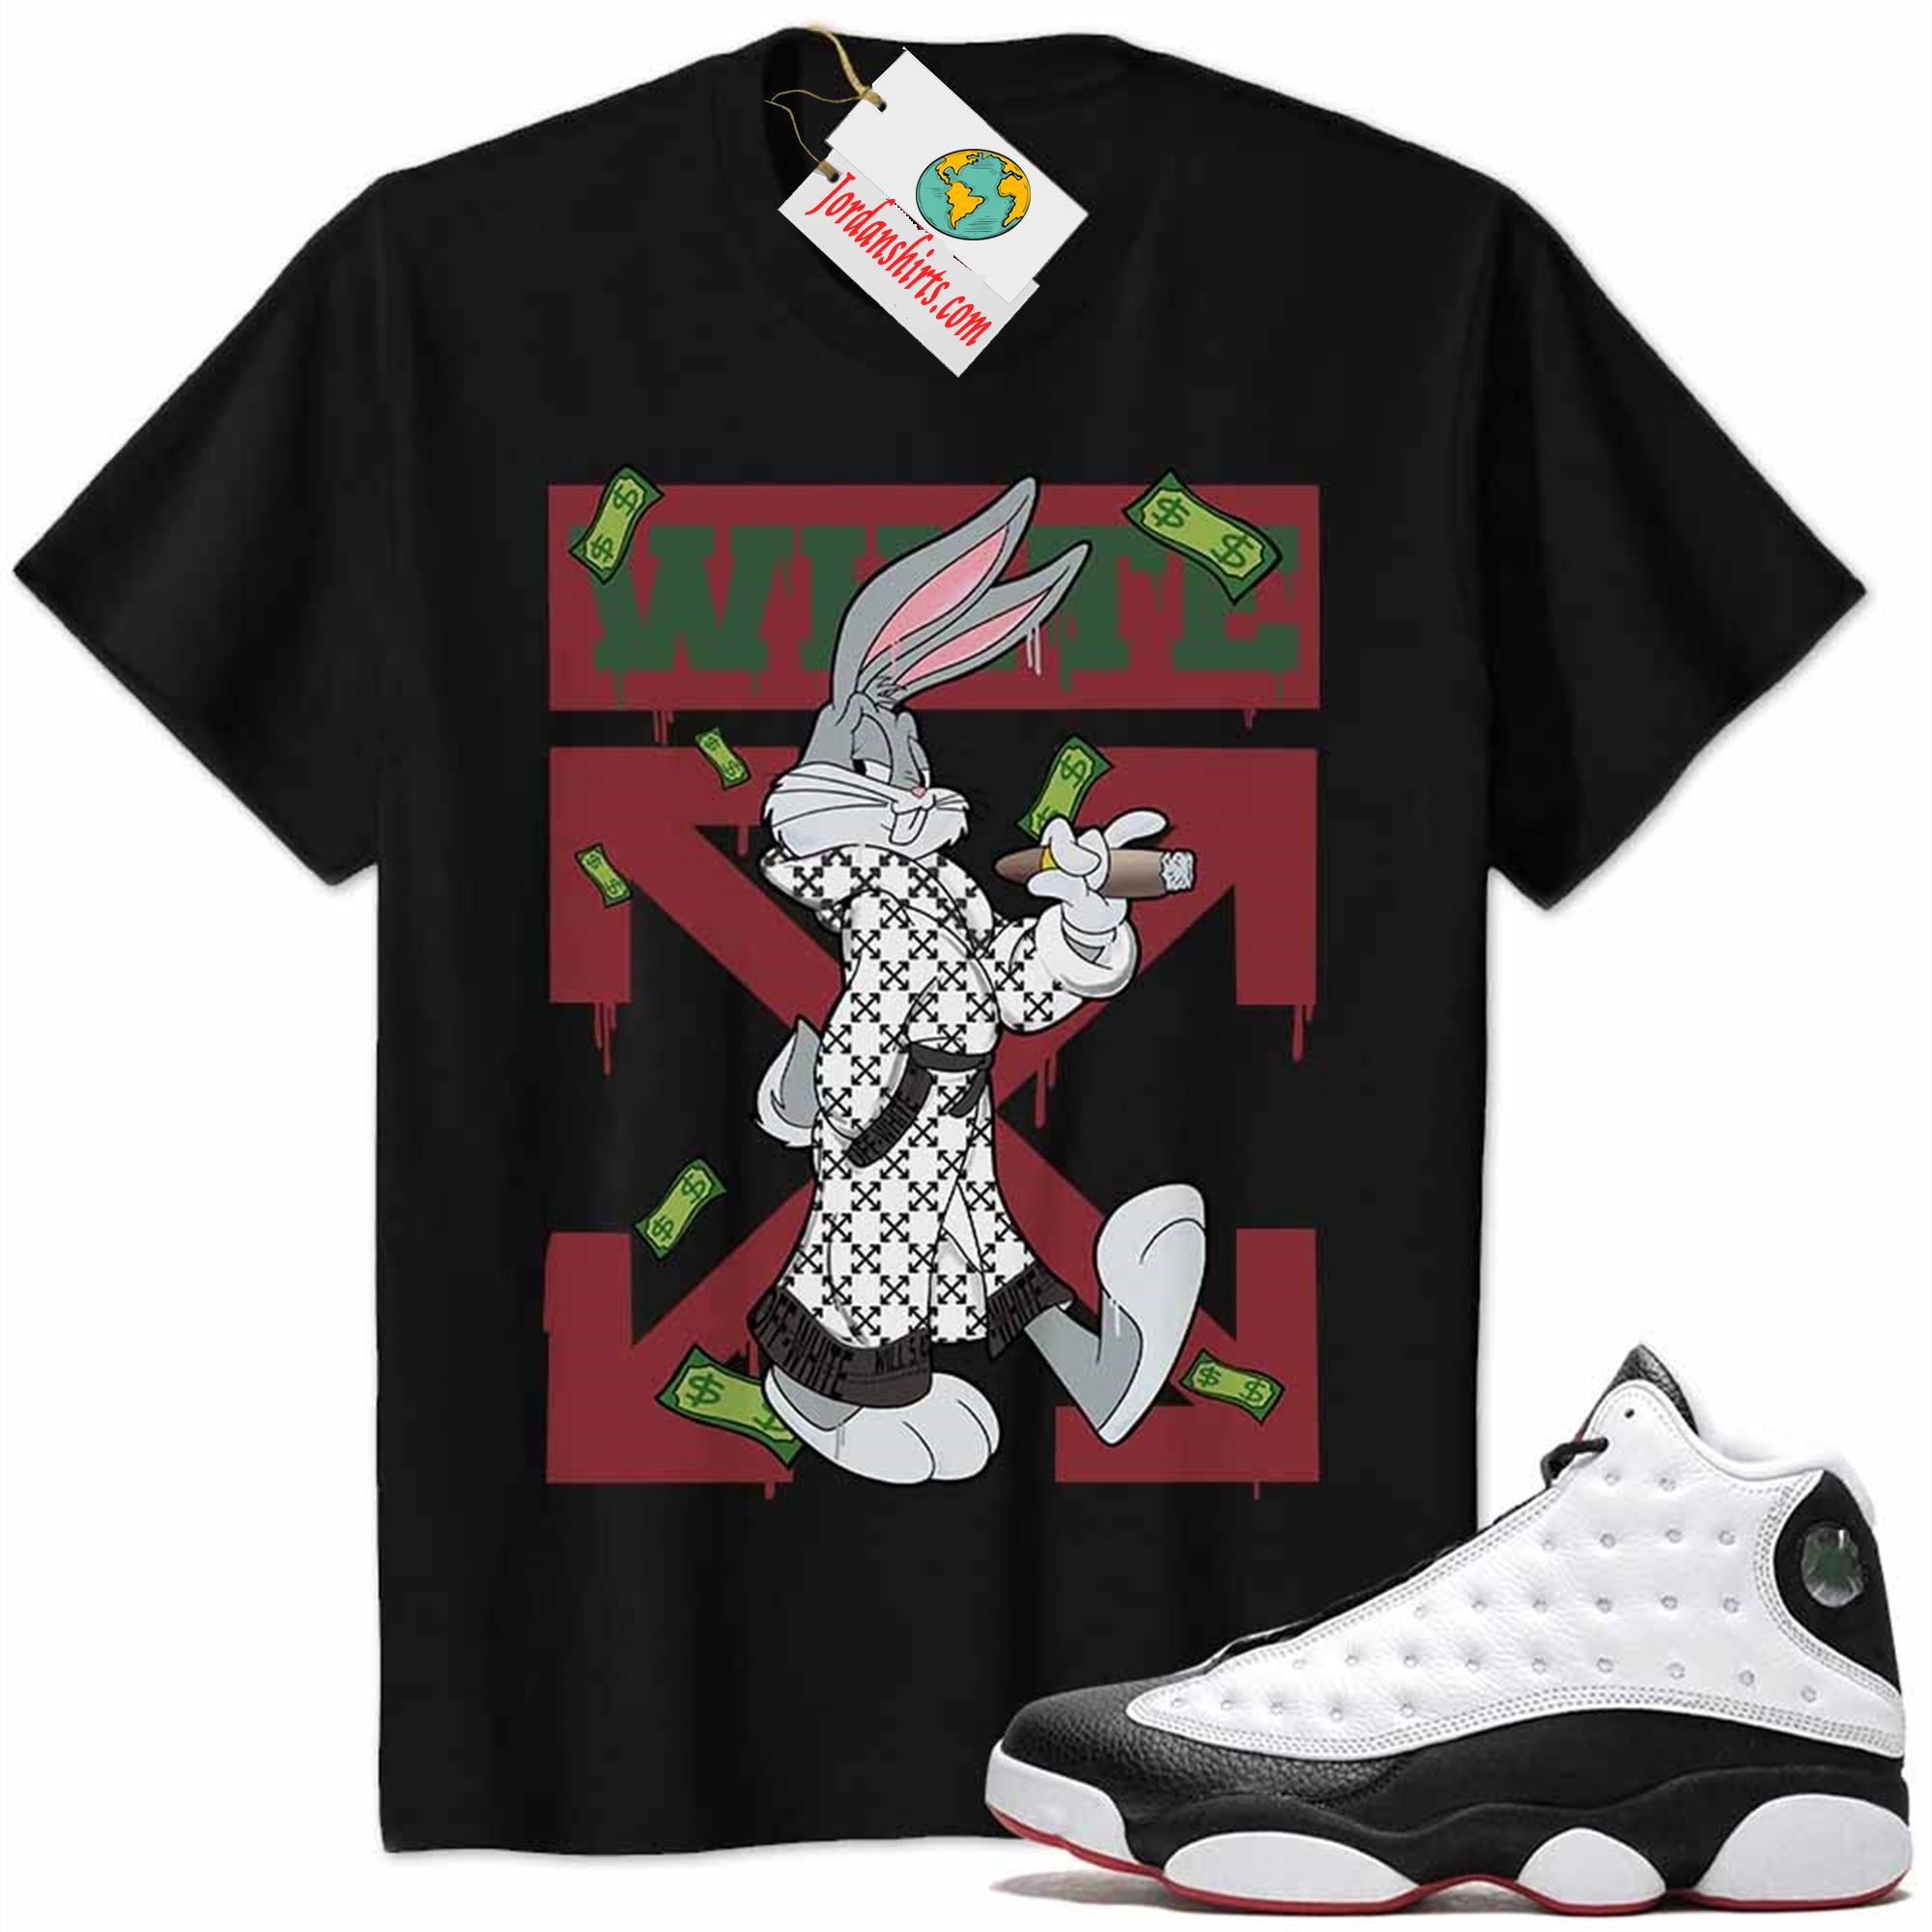 Jordan 13 Shirt, Jordan 13 He Got Game Shirt Bug Bunny Smokes Weed Money Falling Black Size Up To 5xl